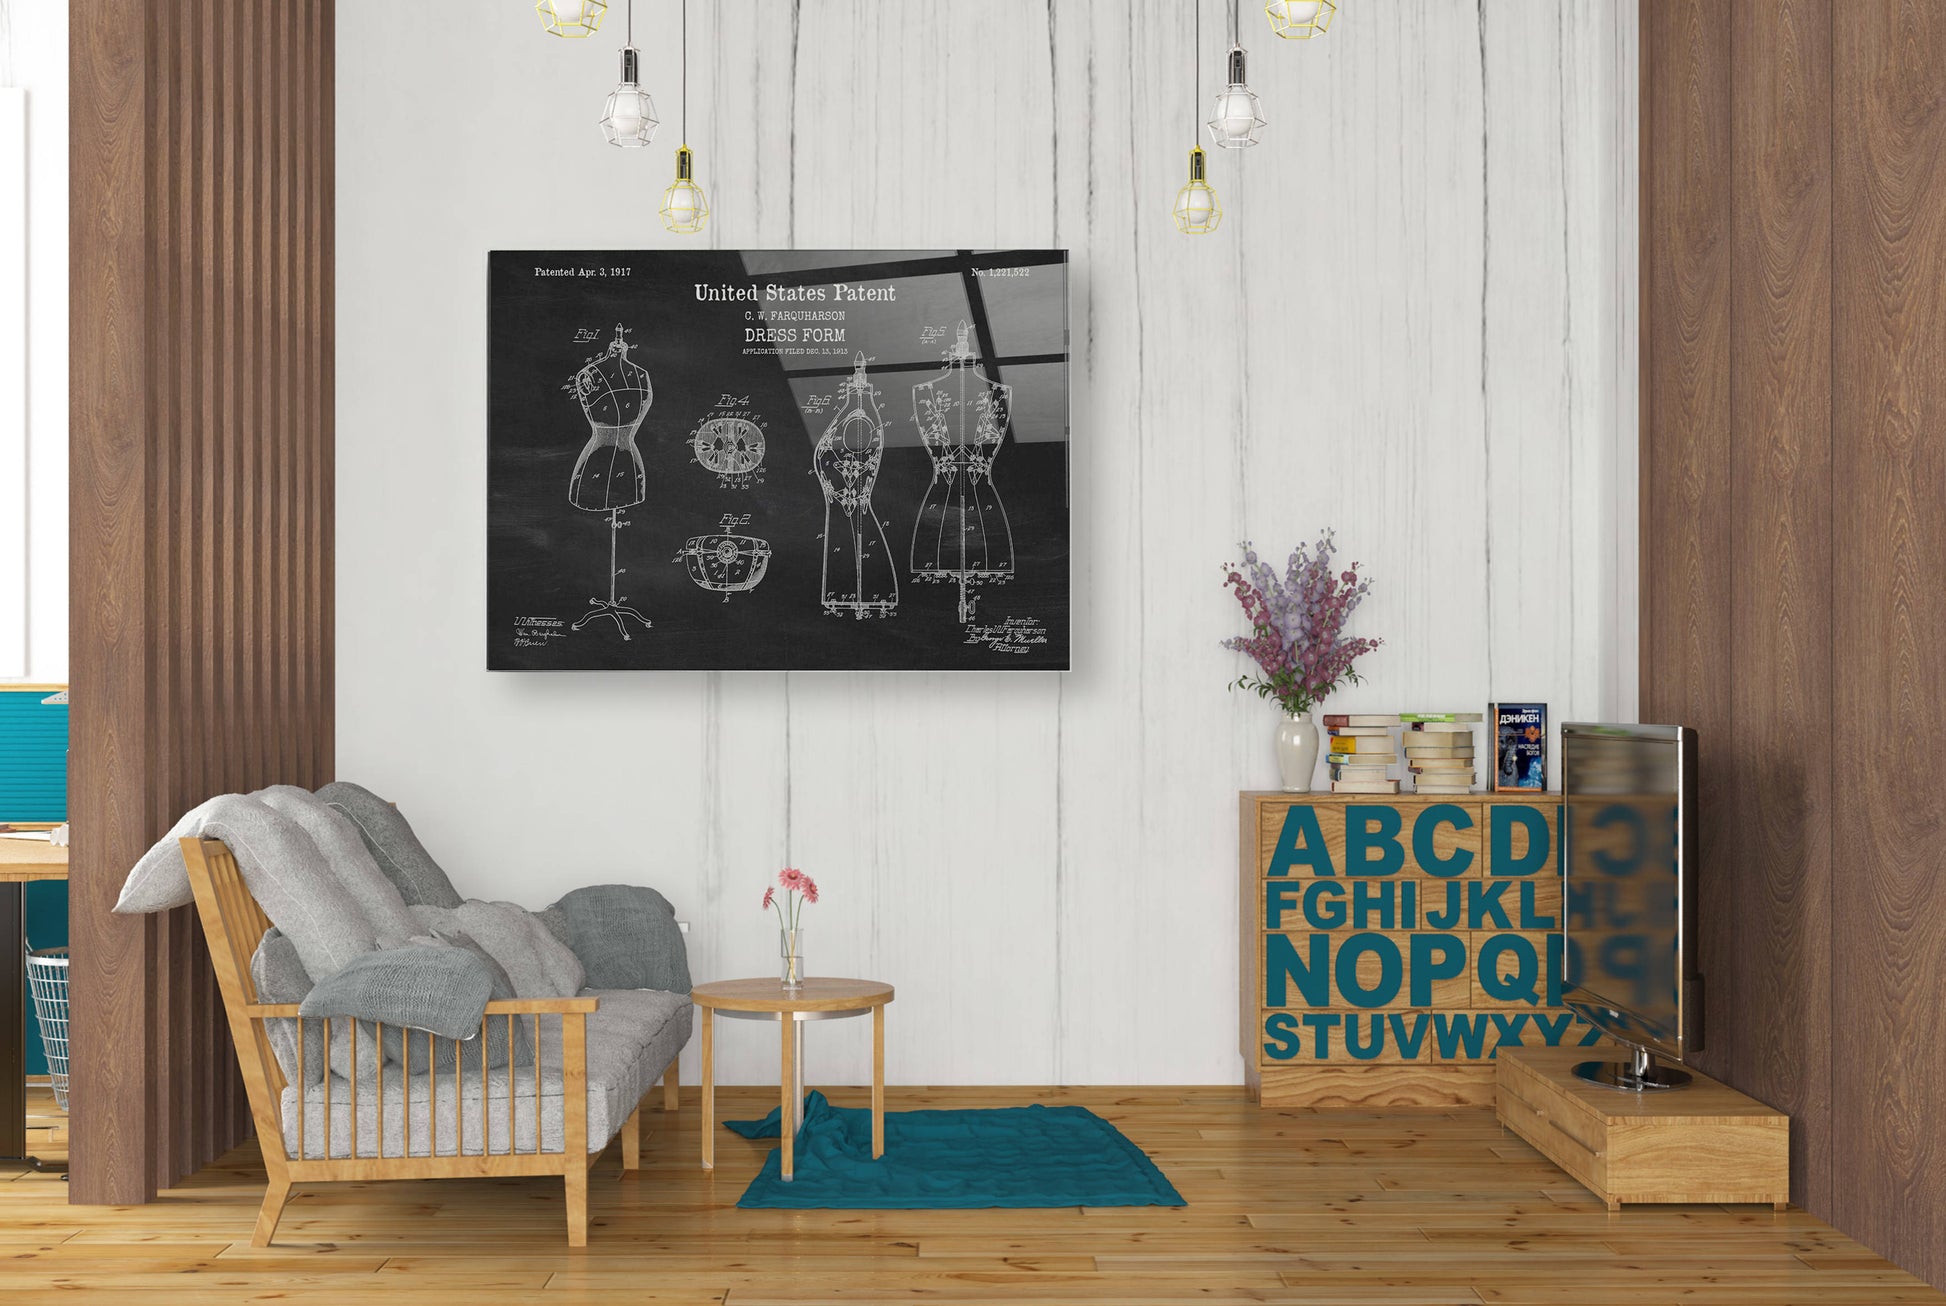 Epic Art 'Dress Form Blueprint Patent Chalkboard' Acrylic Glass Wall Art,24x36